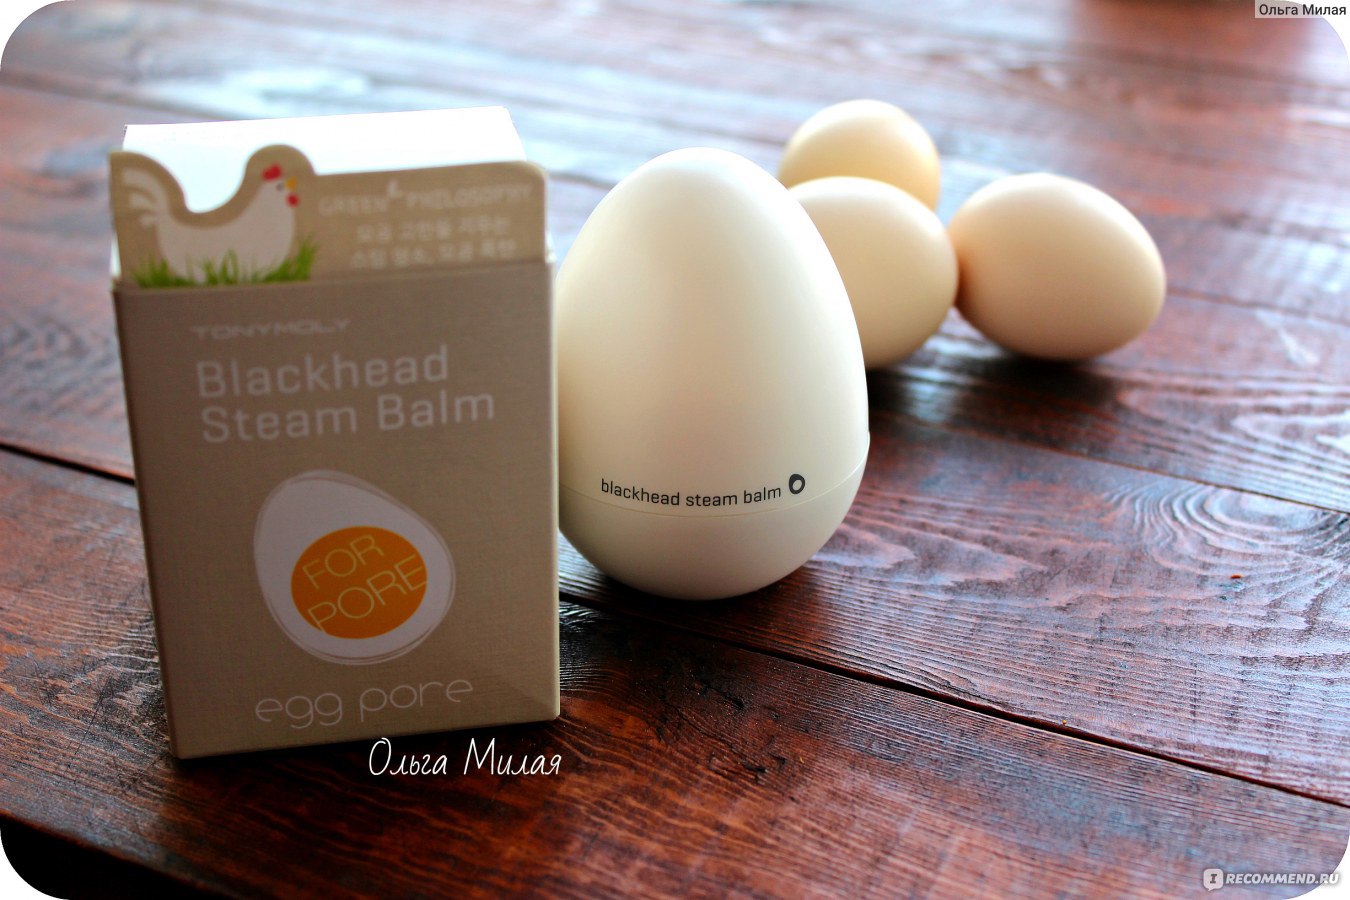 Blackhead steam balm egg pore как пользоваться фото 14